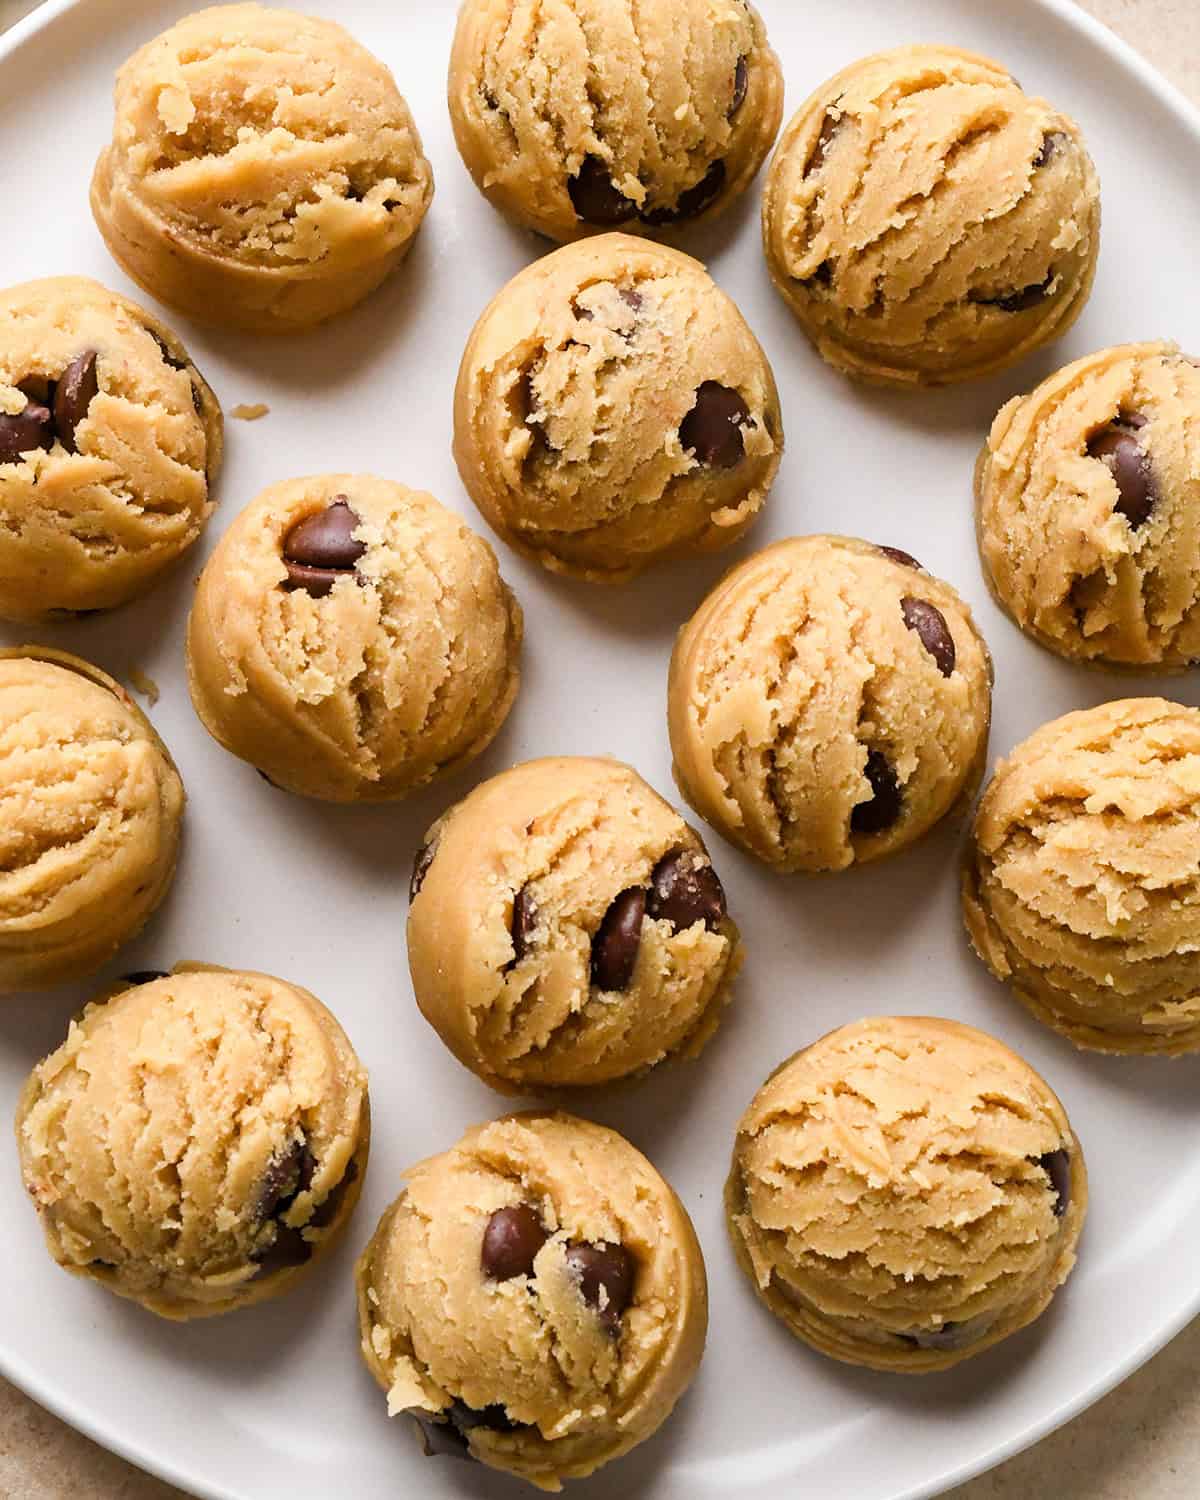 14 Edible Cookie Dough balls on a plate